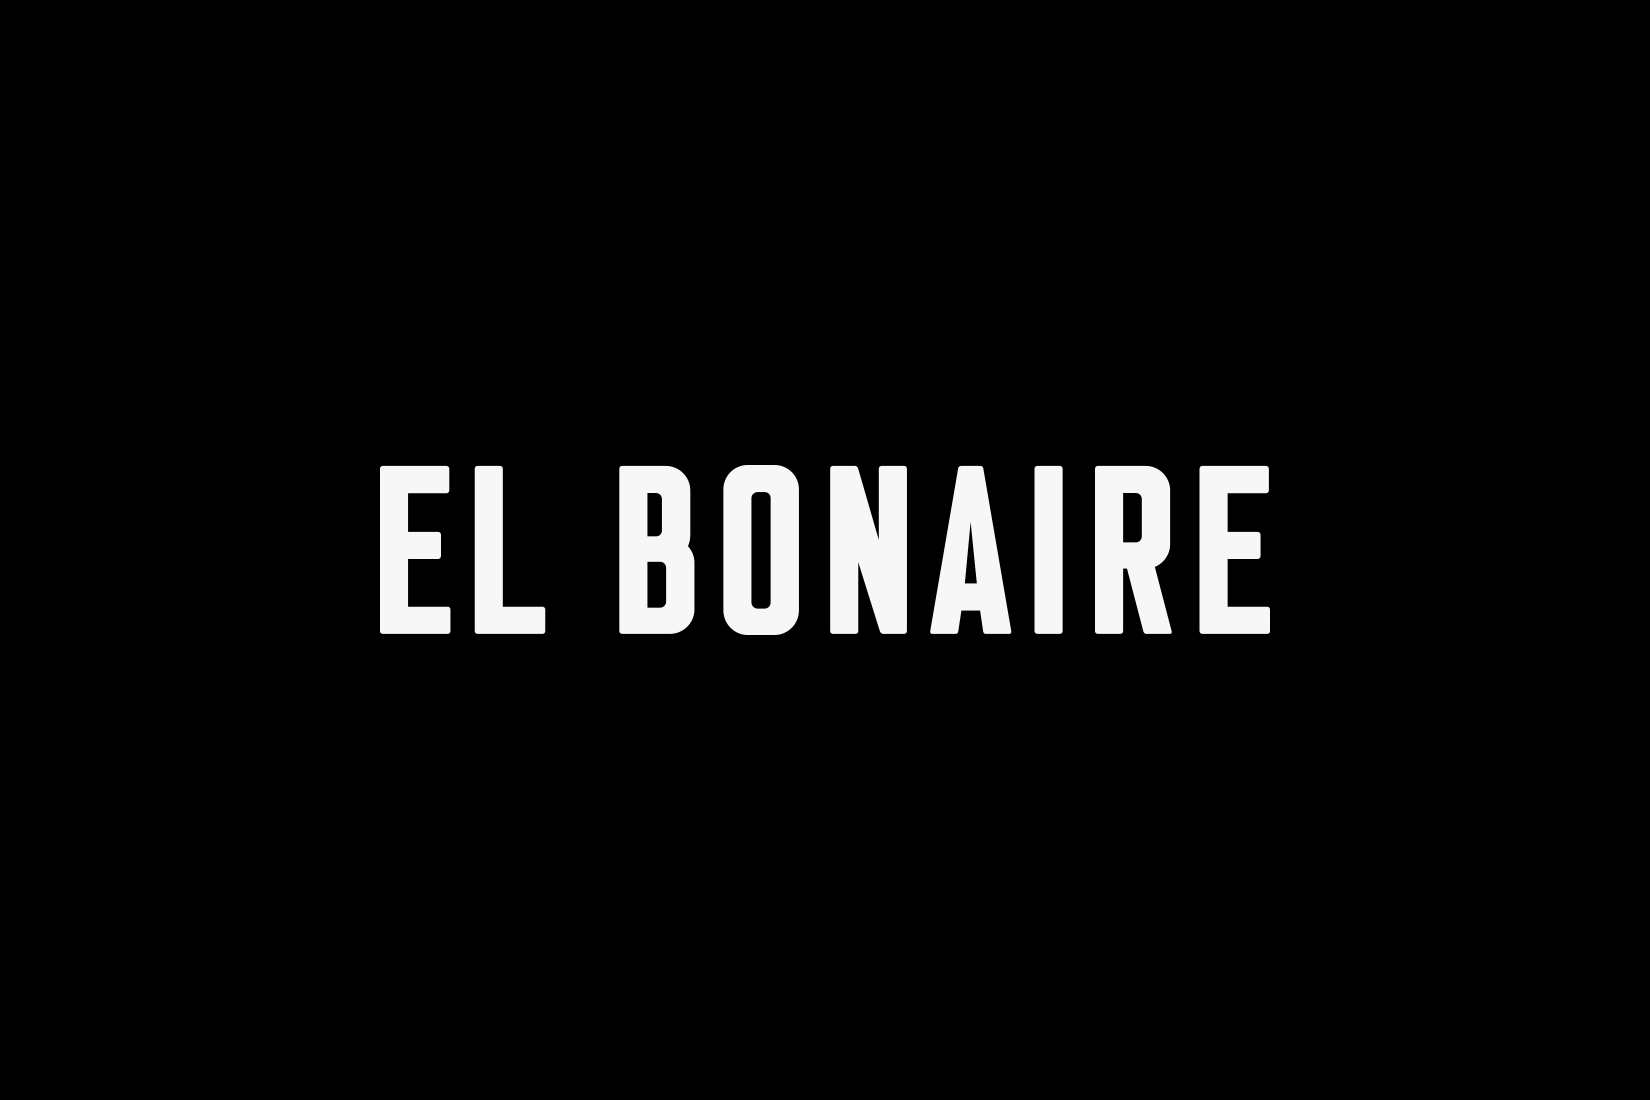 El Bonaire